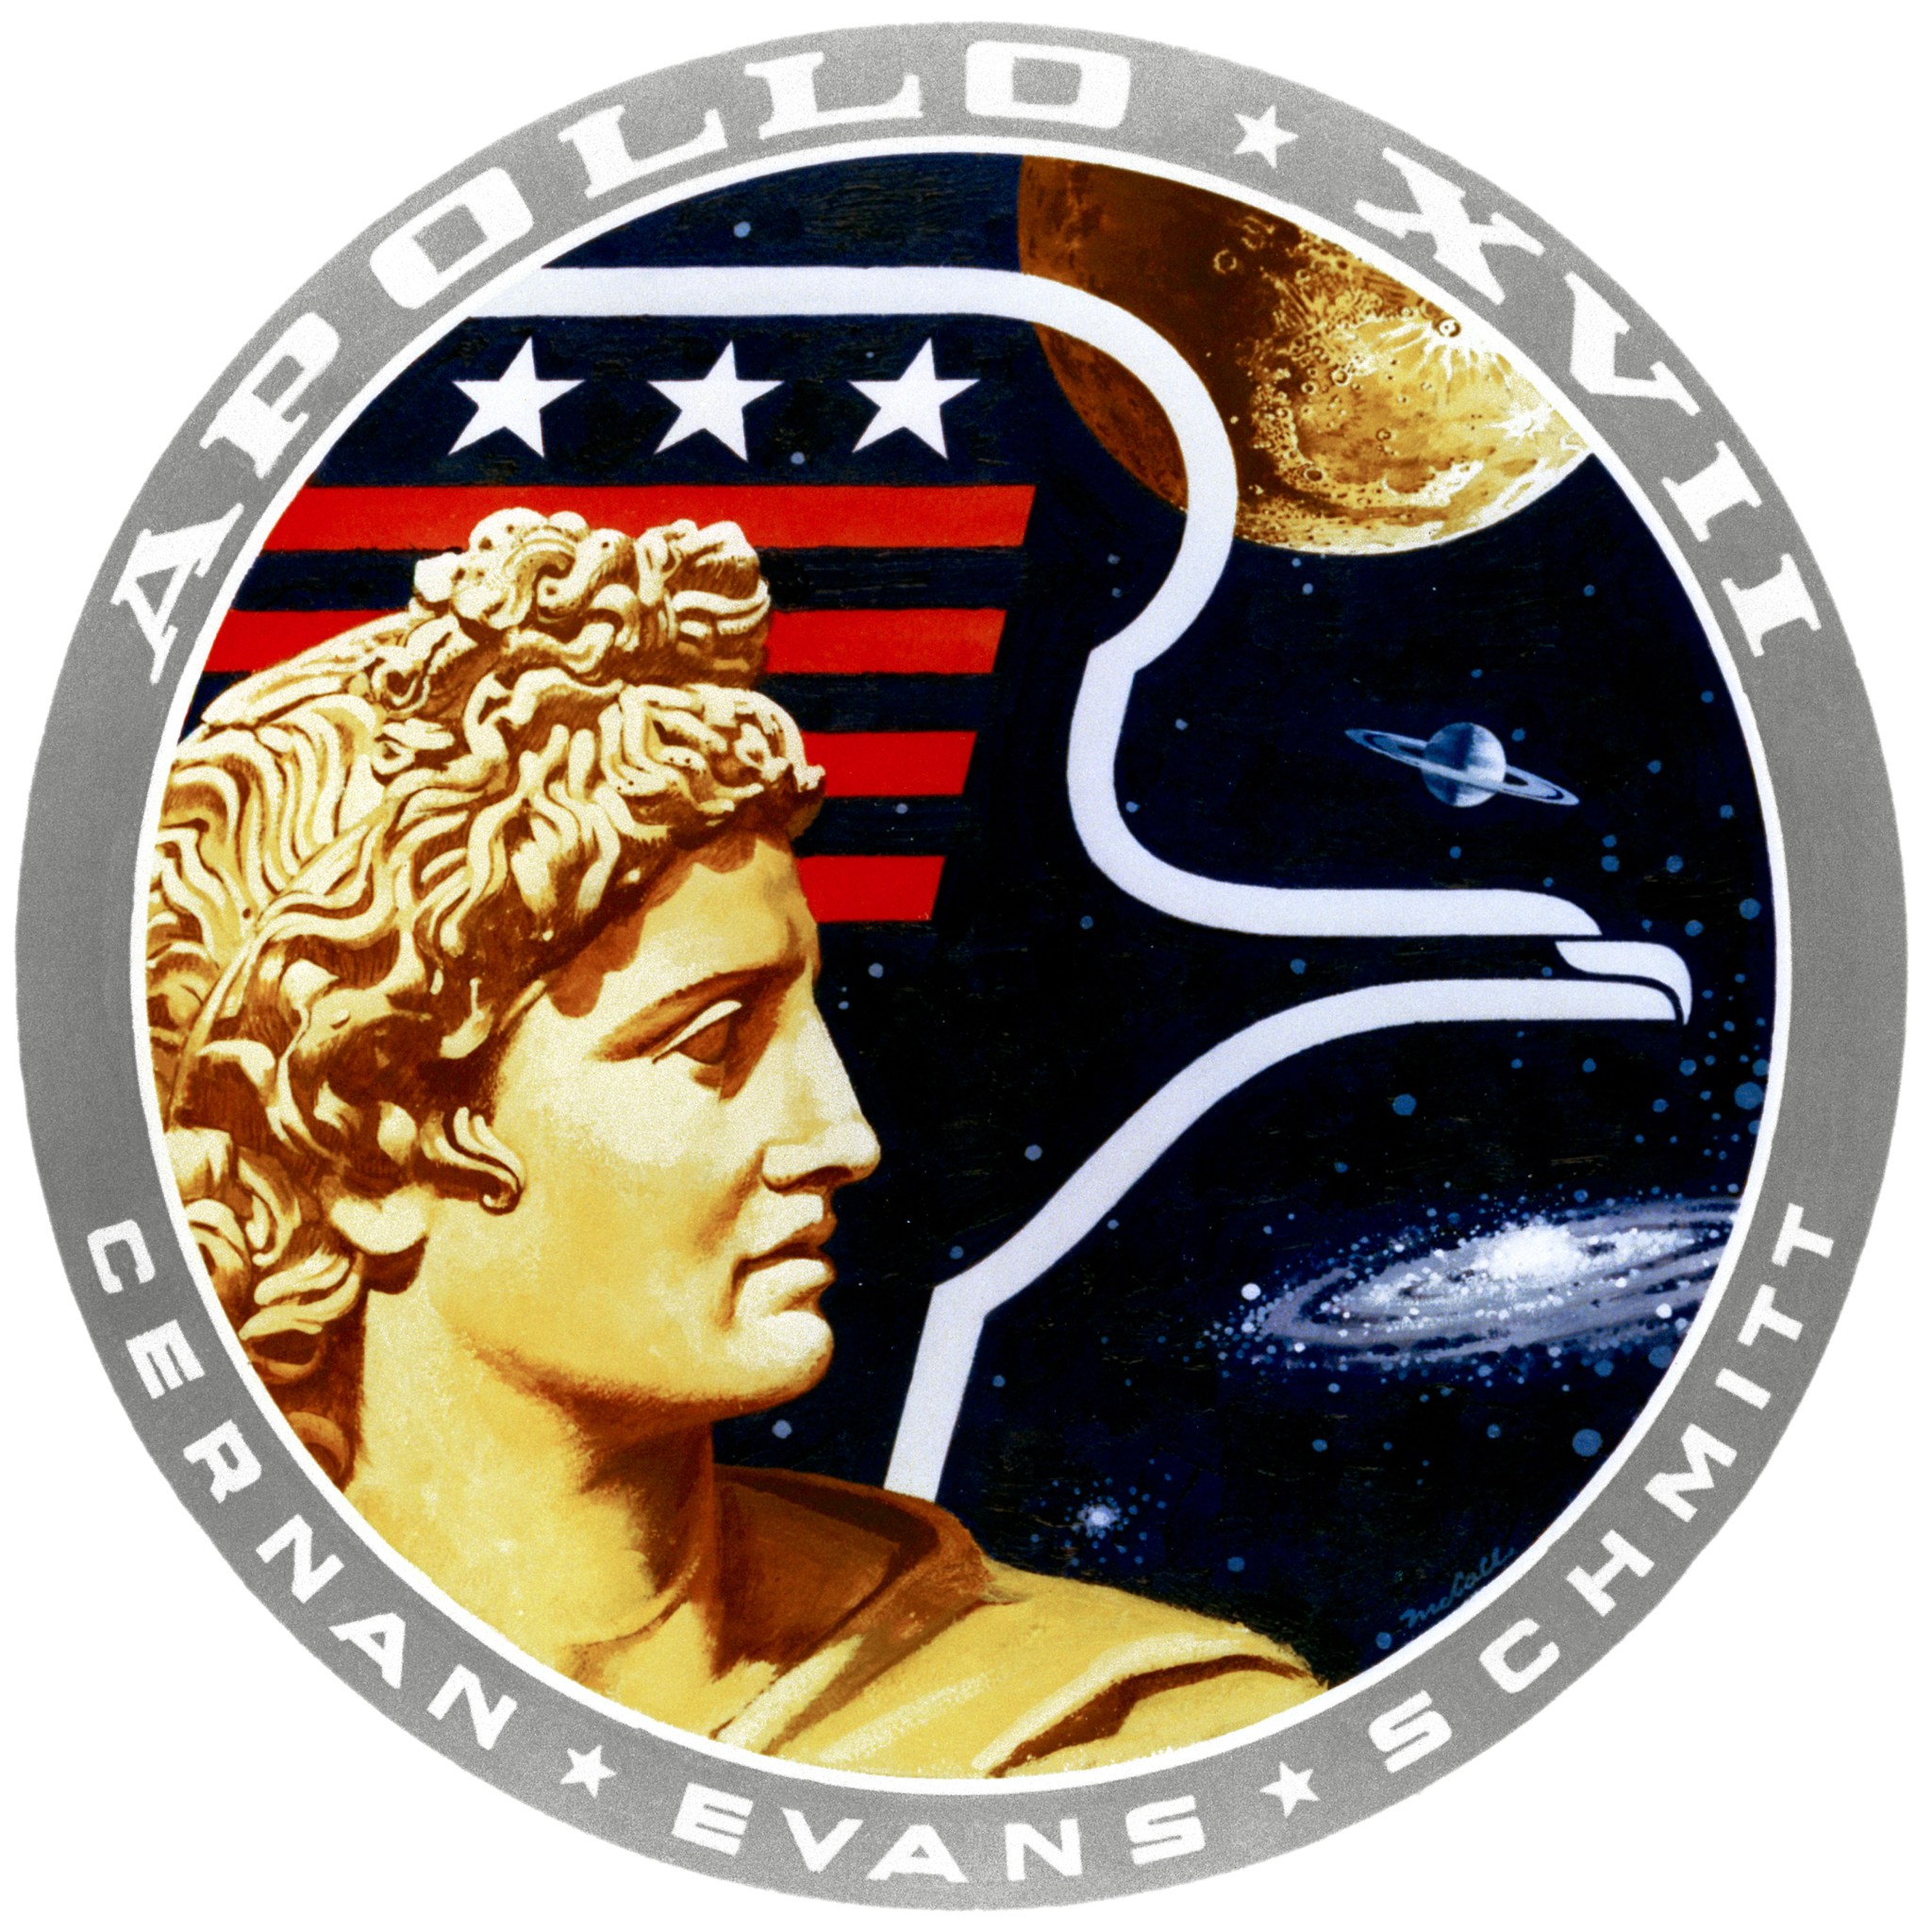 Apollo 17 emblem with image of Greek god Apollo, Americna eagle, mission name and astronauts' names